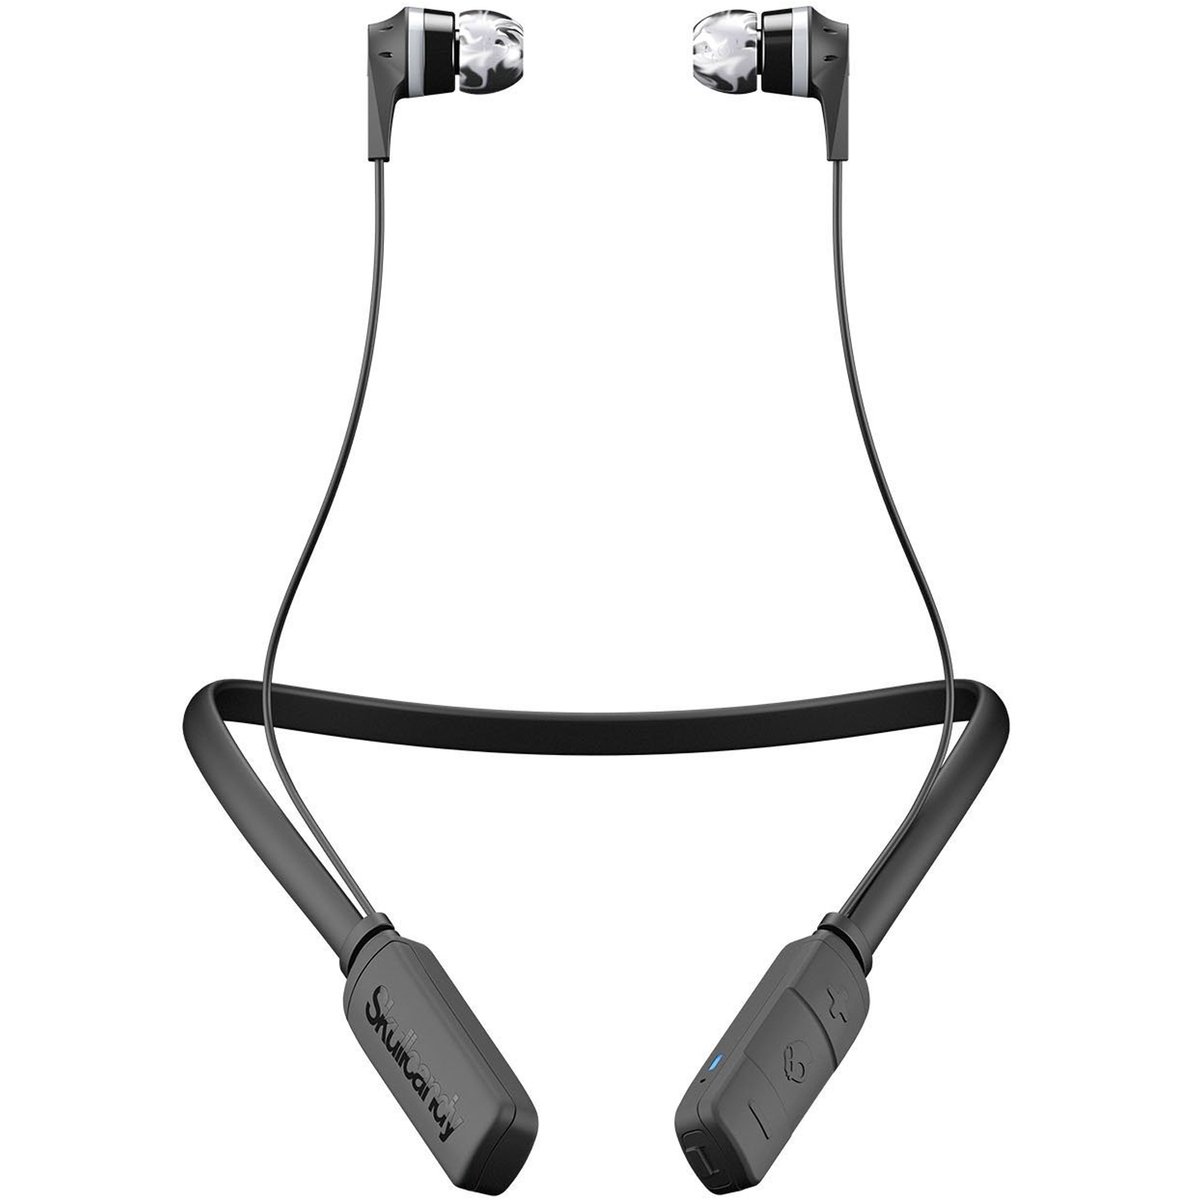 Skullcandy Bluetooth Wireless Headphones INKD-S2IKW-J509